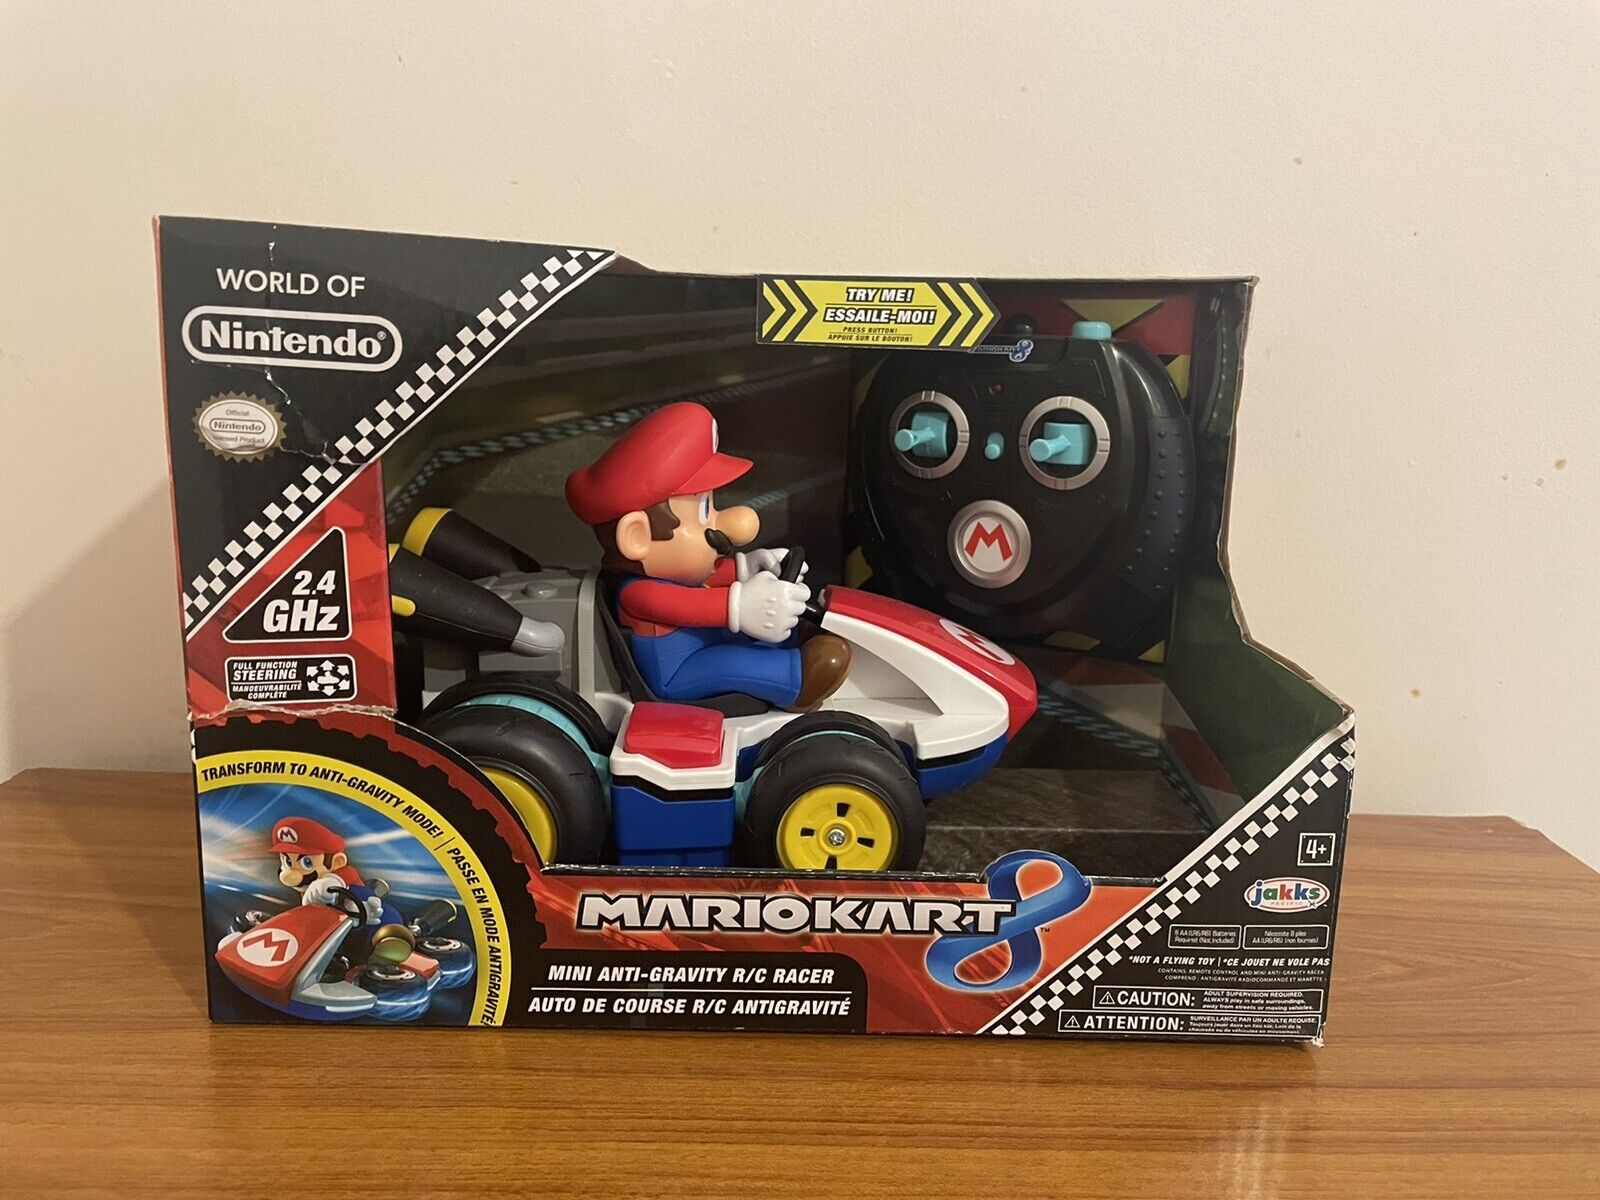 RC Car Toy World of Nintendo Mario Kart 8 Mini Anti Gravity RC Racer 2.4 GHz New